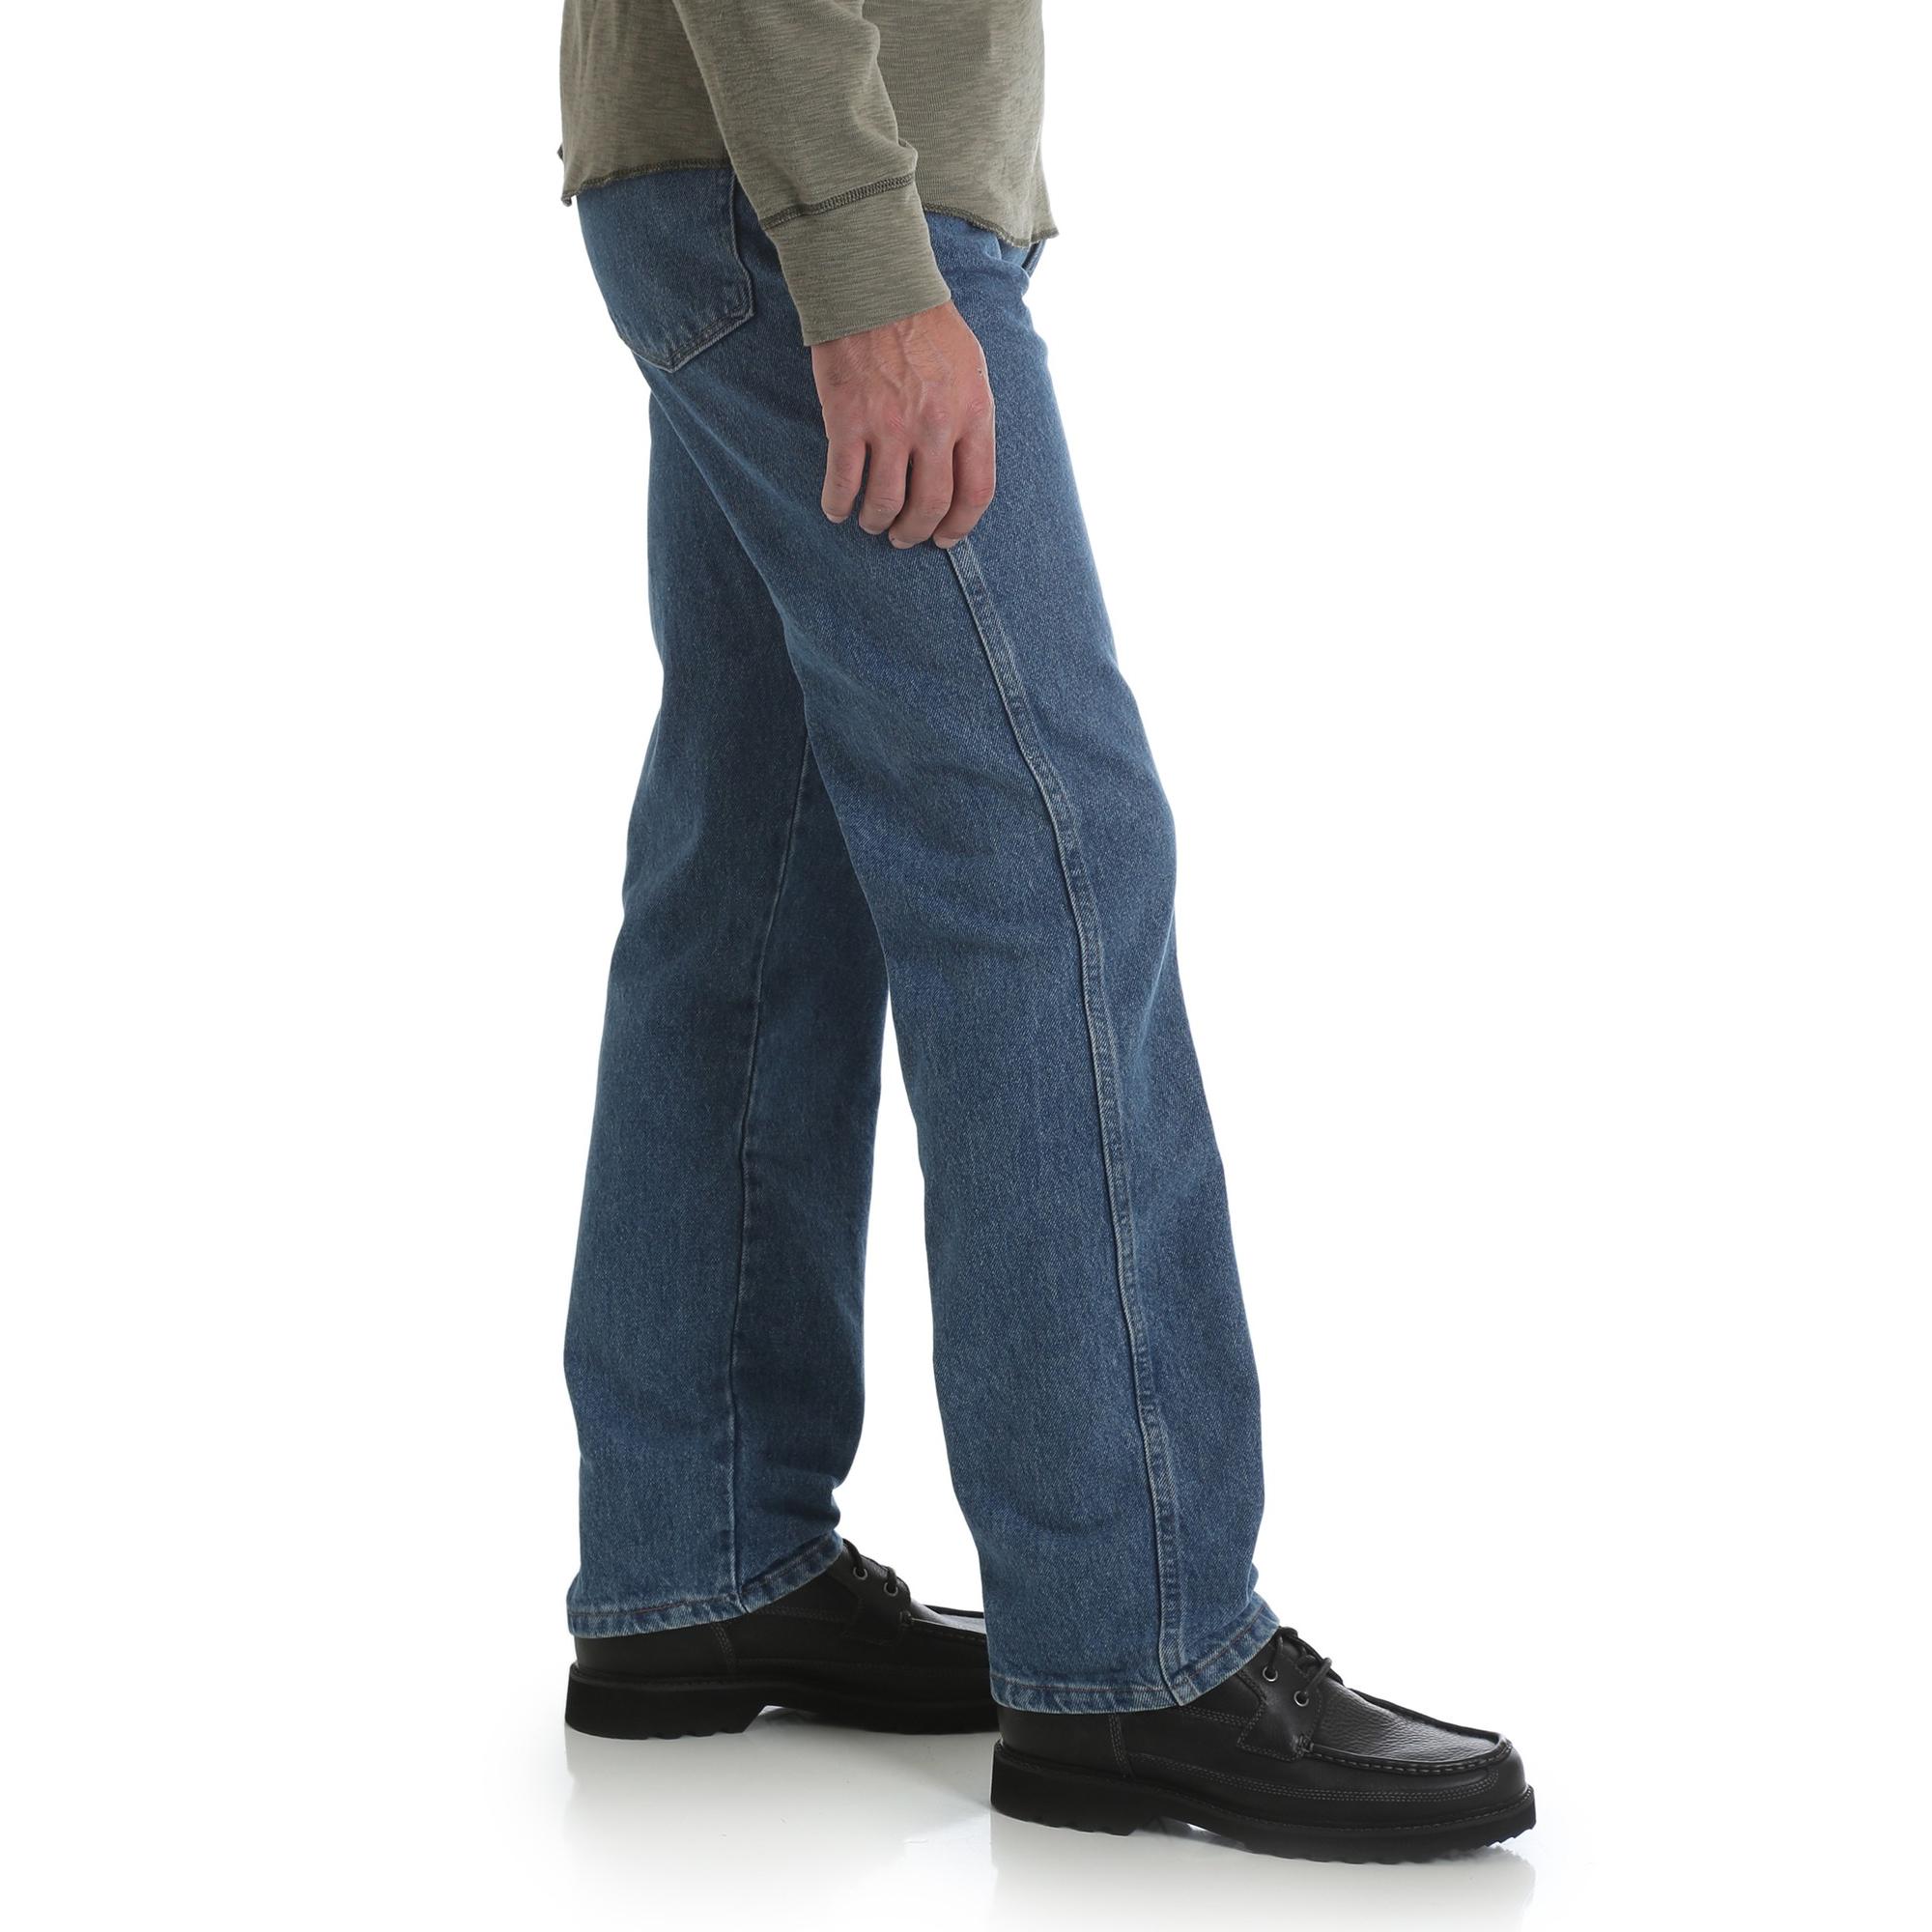 Wrangler Rustler Men's and Big Men's Regular Fit Jeans - image 3 of 4